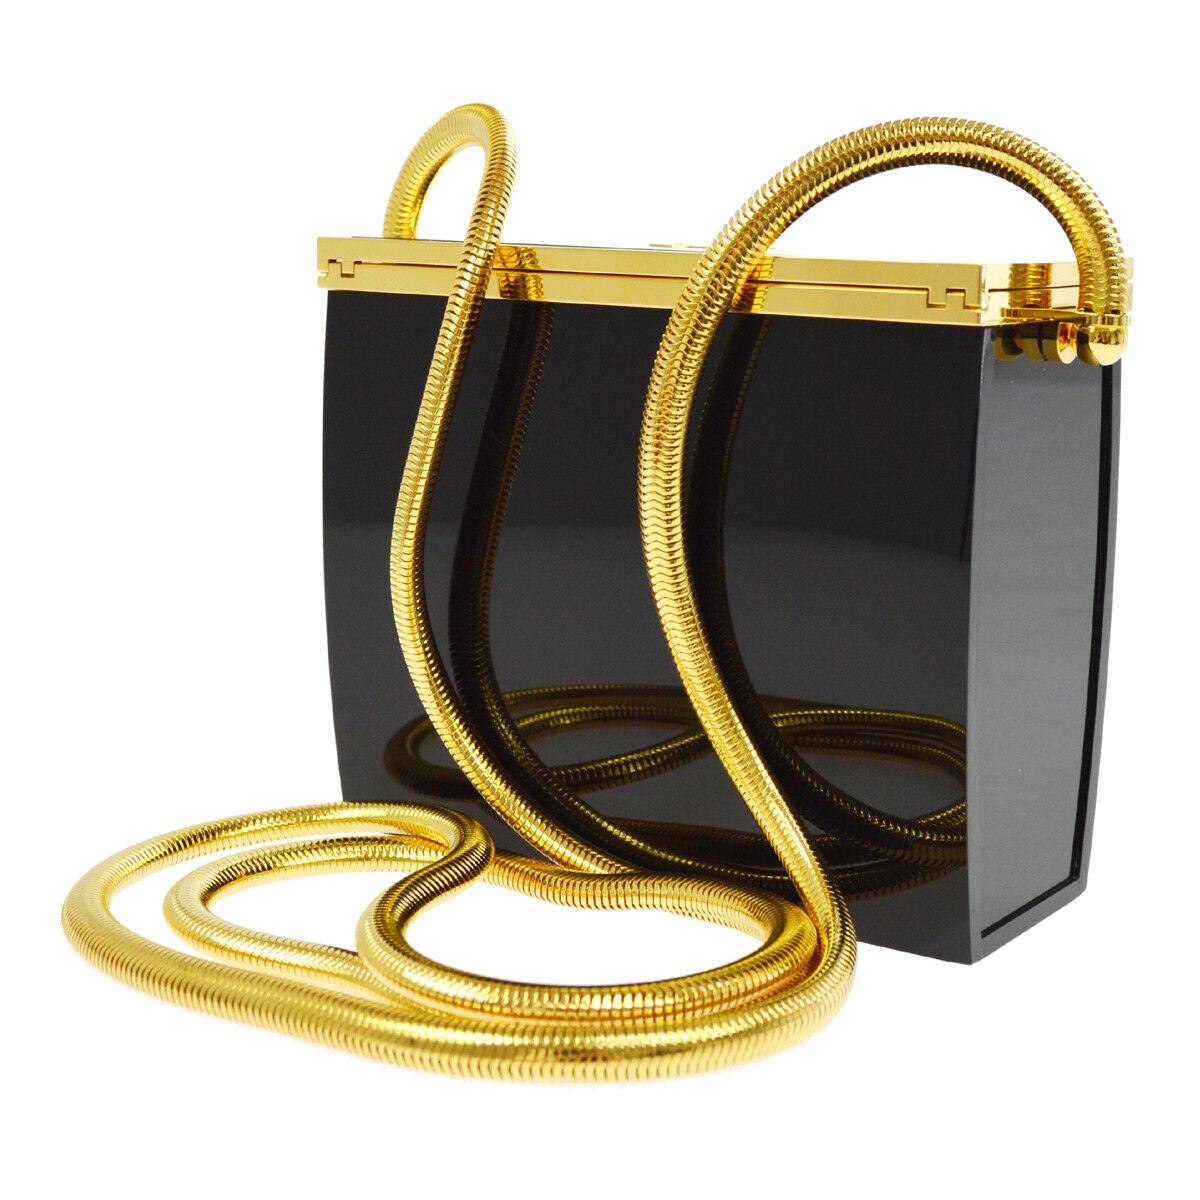 gold chanel clutch bag black